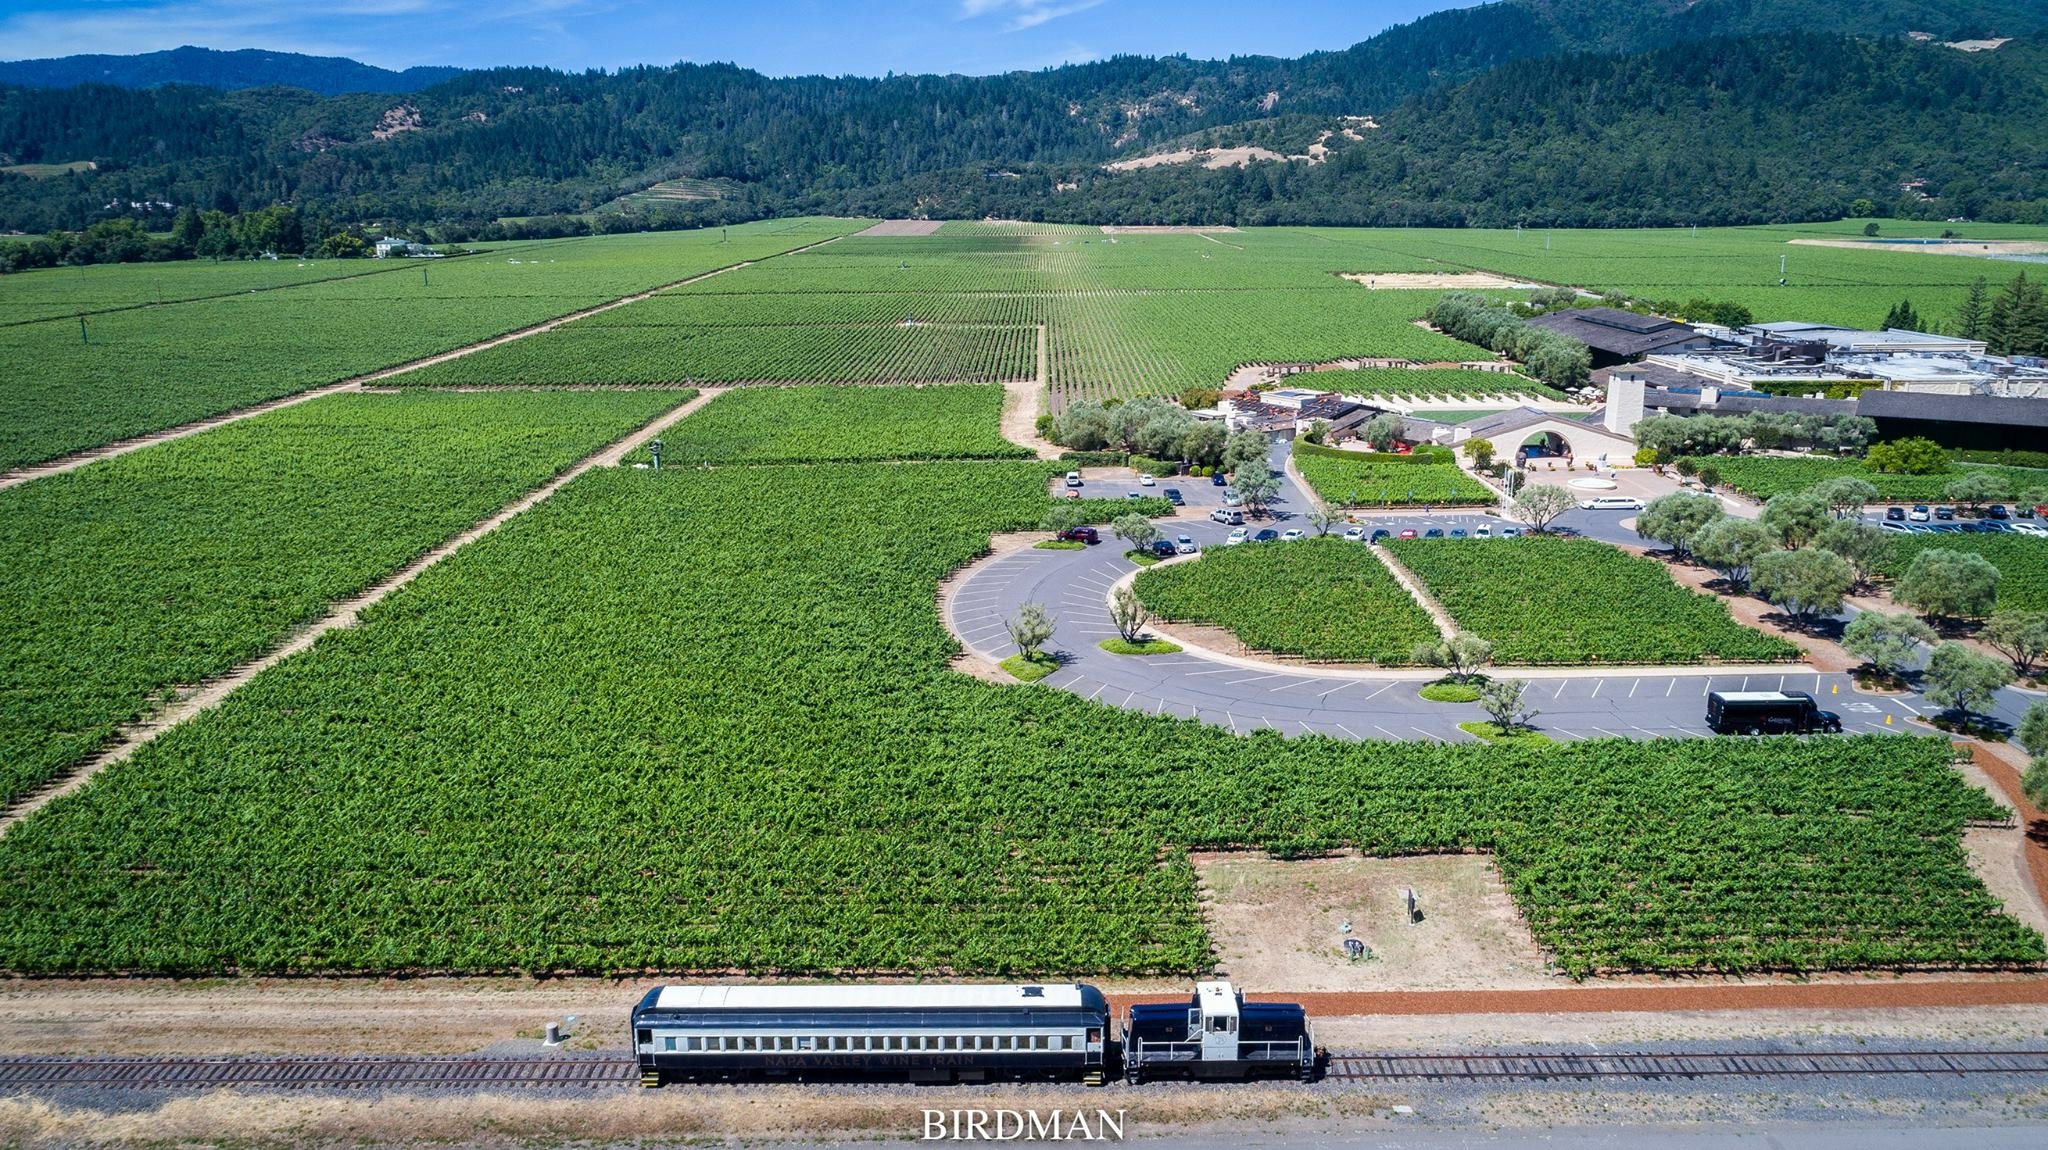 Napa Valley Wine Train - Napa, CA